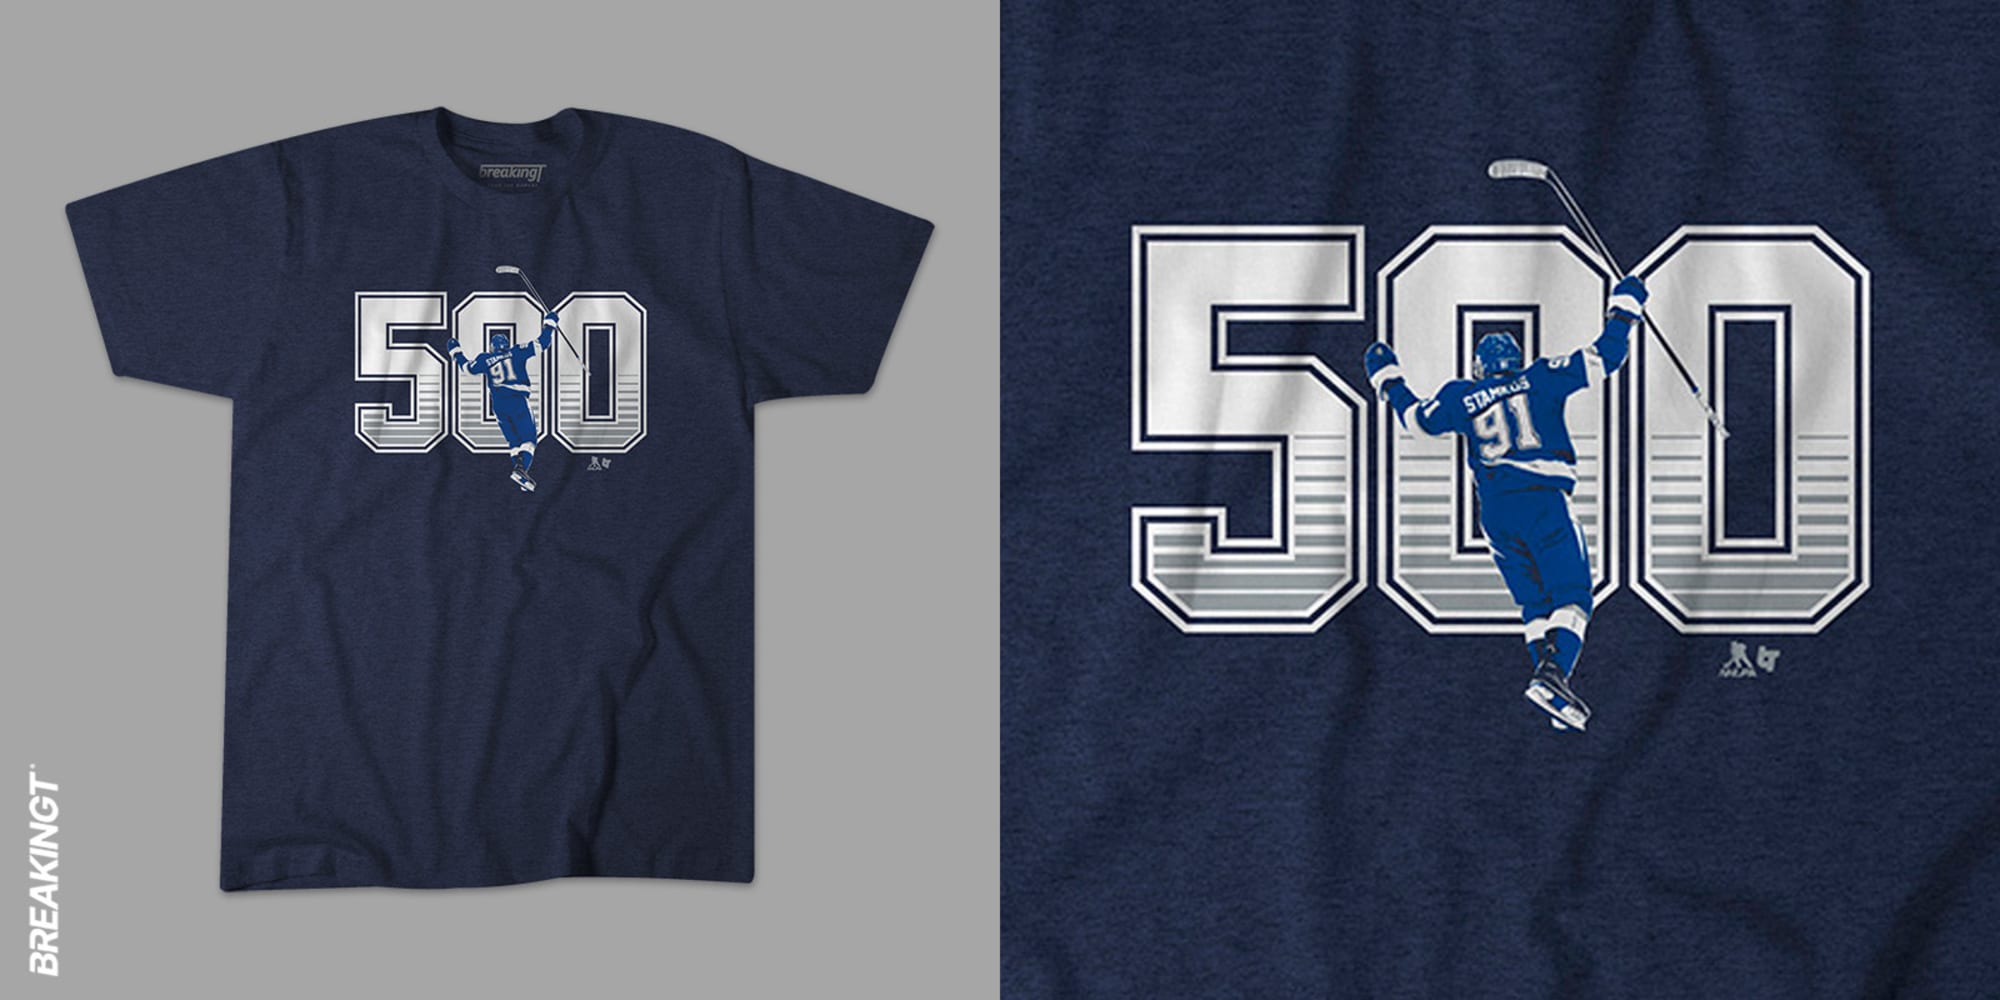 Tampa Bay Lightning Steven Stamkos 500 Goals Shirt, hoodie